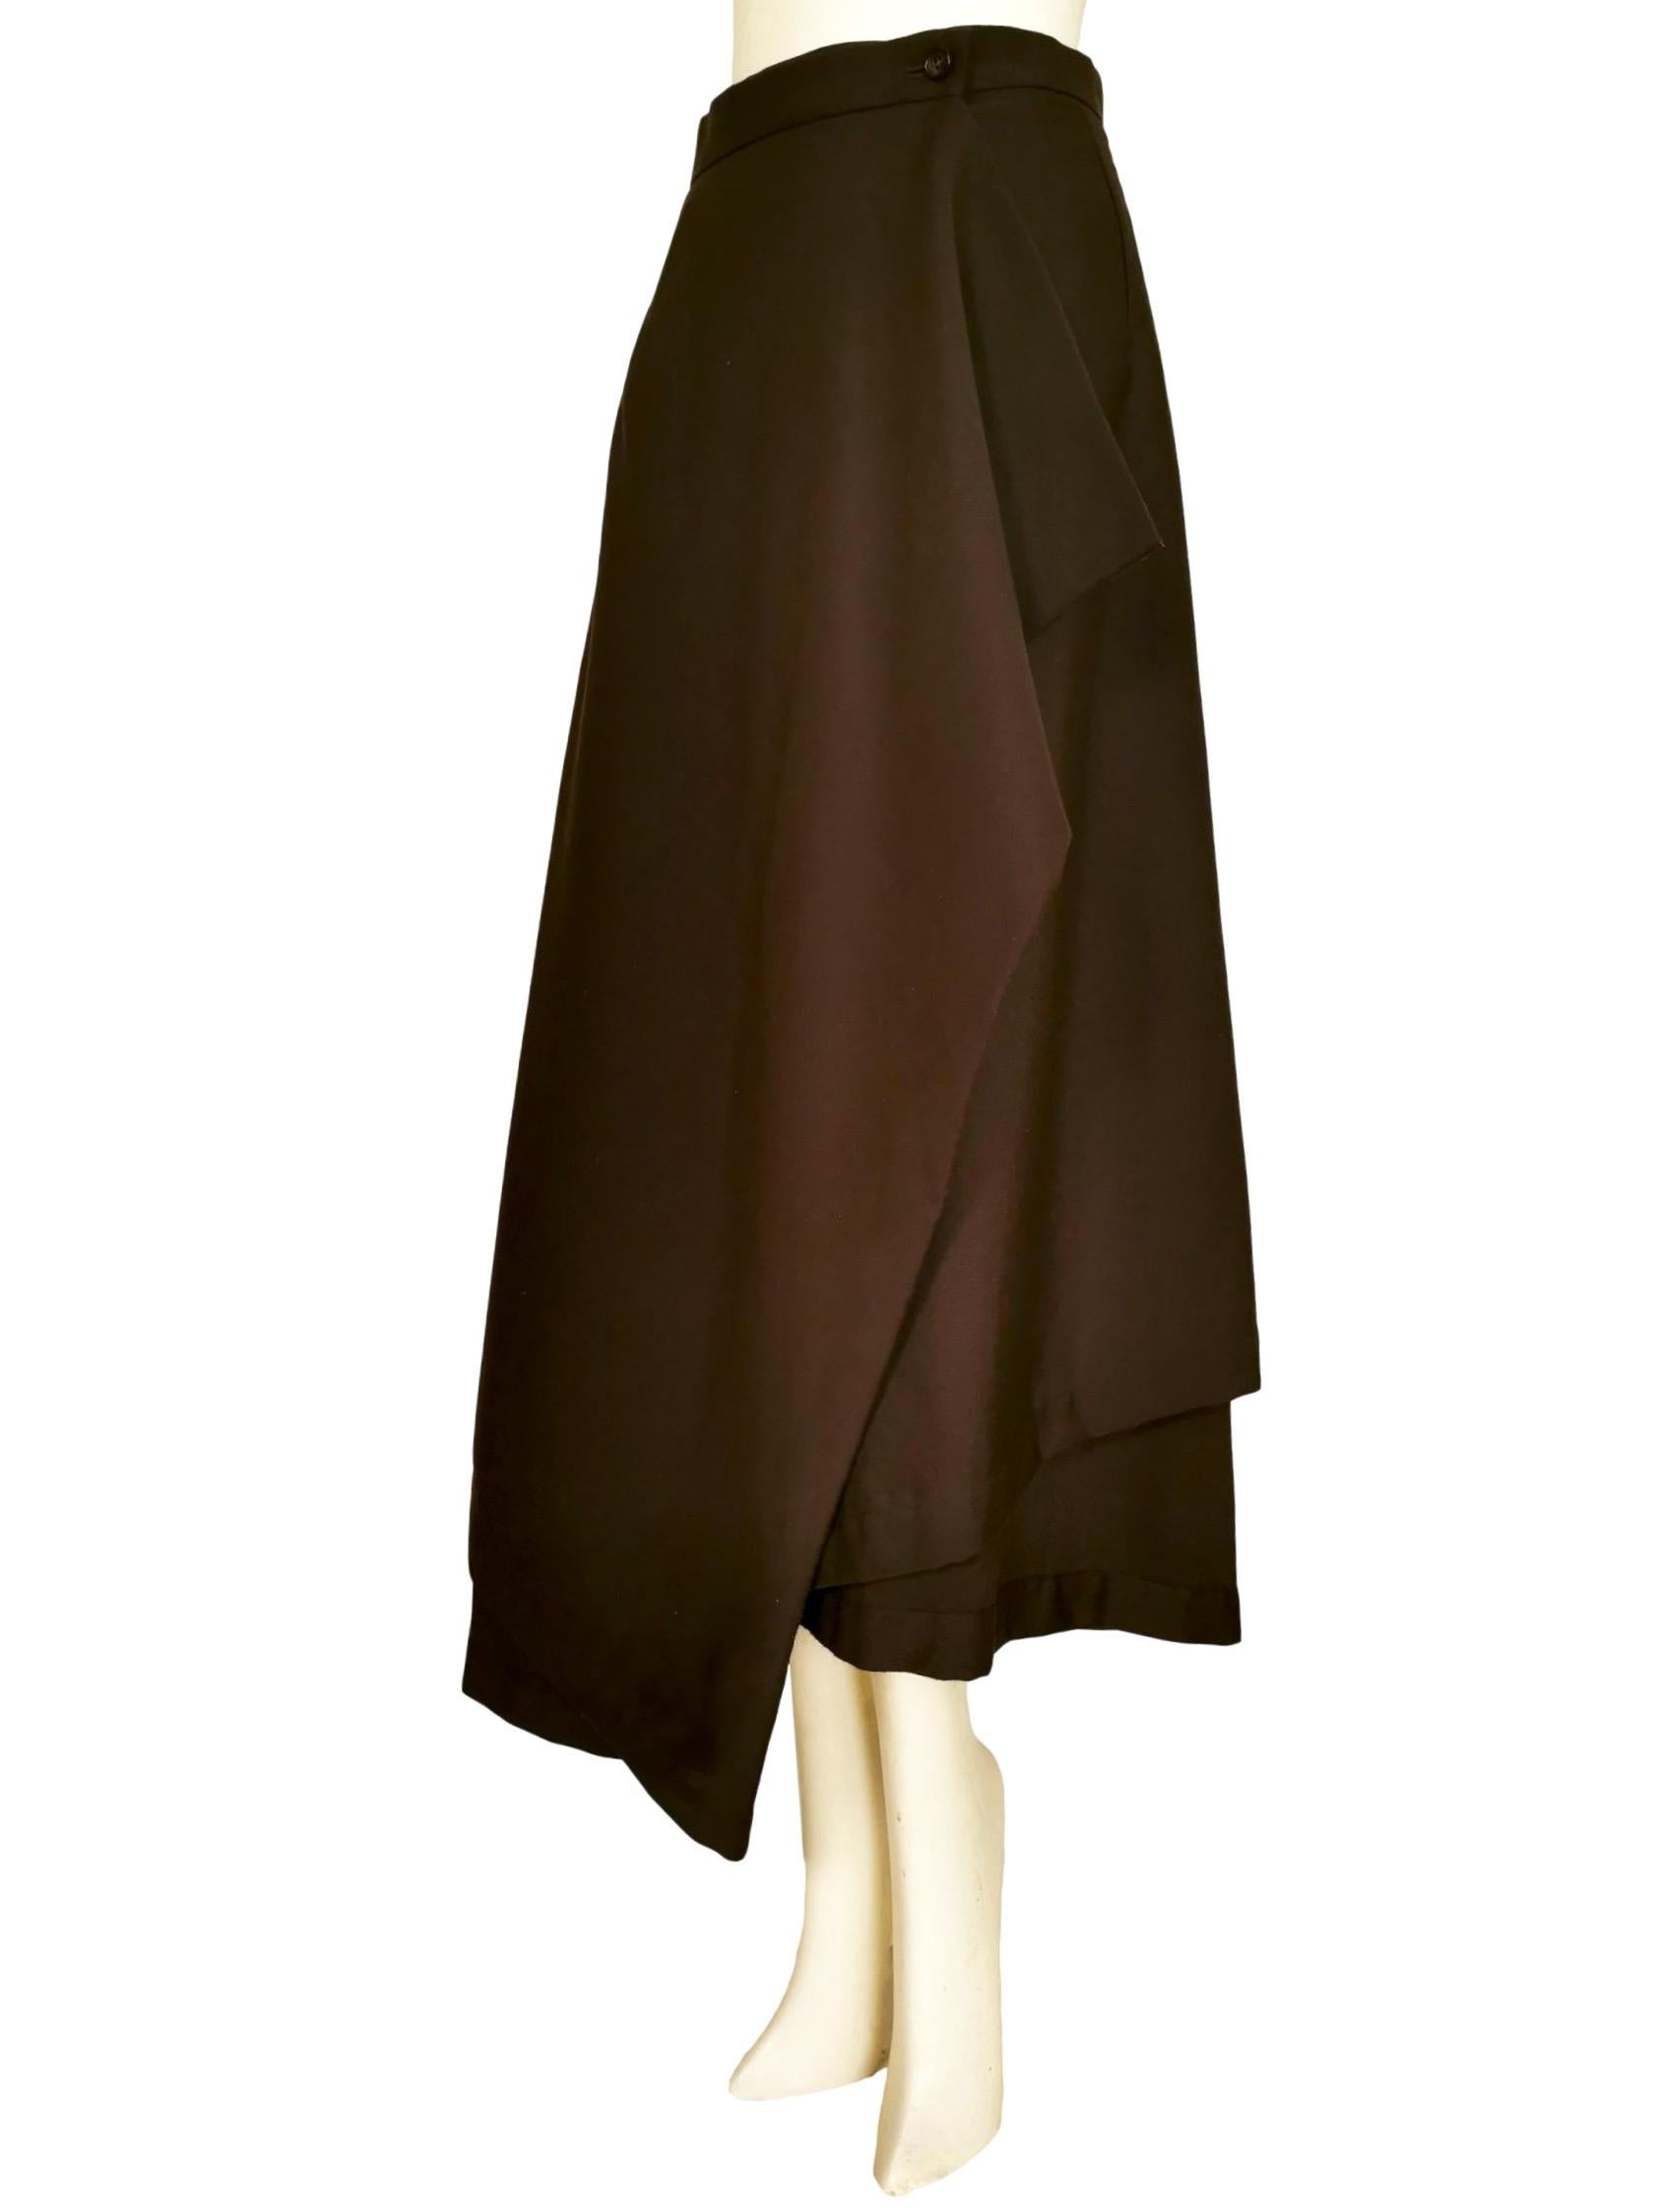 Comme des Garcons
AD 1996
Wrap Around Skirt
Size S
24 inch Waist